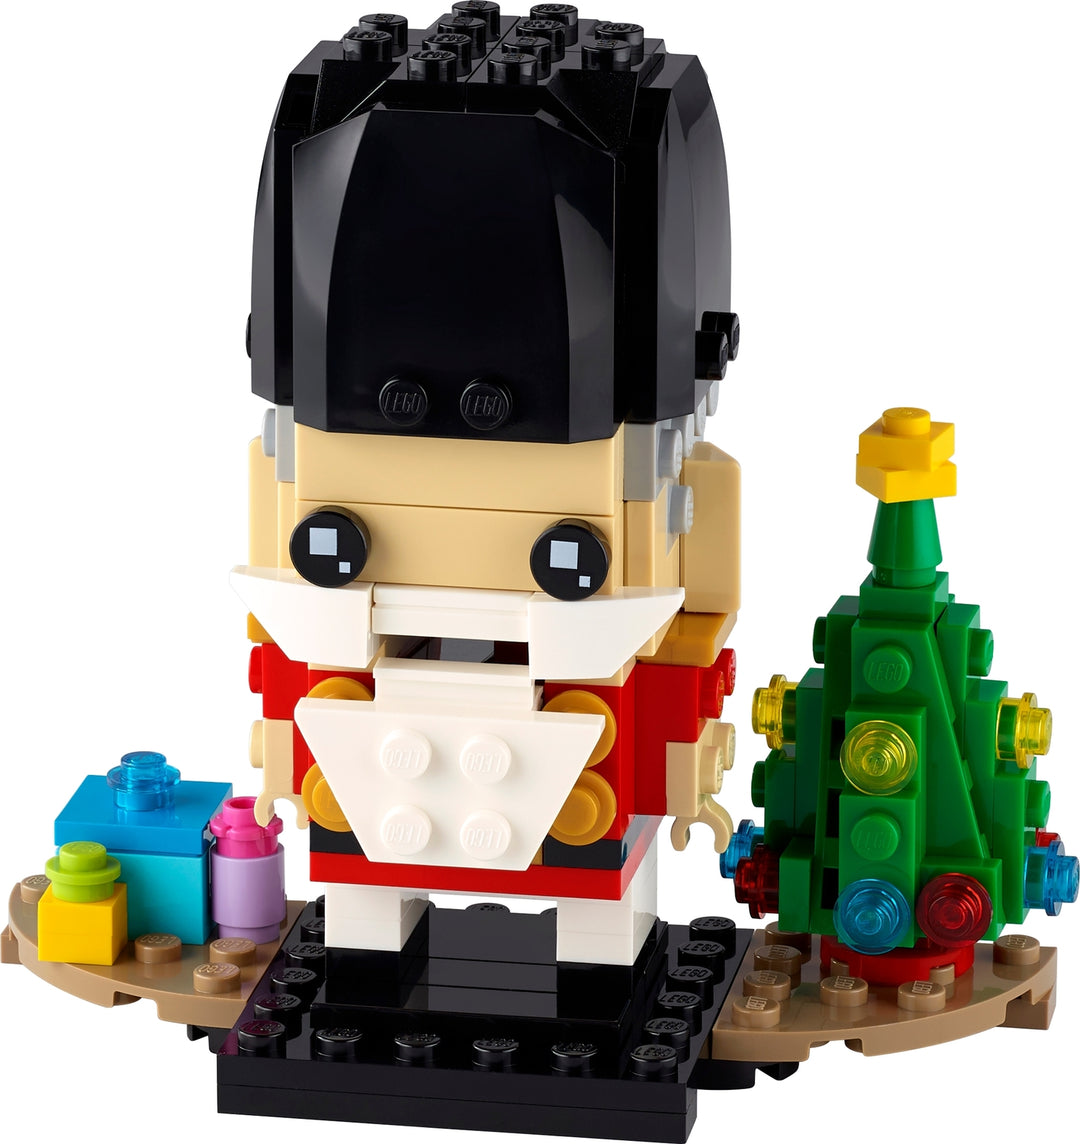 LEGO Brickheadz: Nutcracker